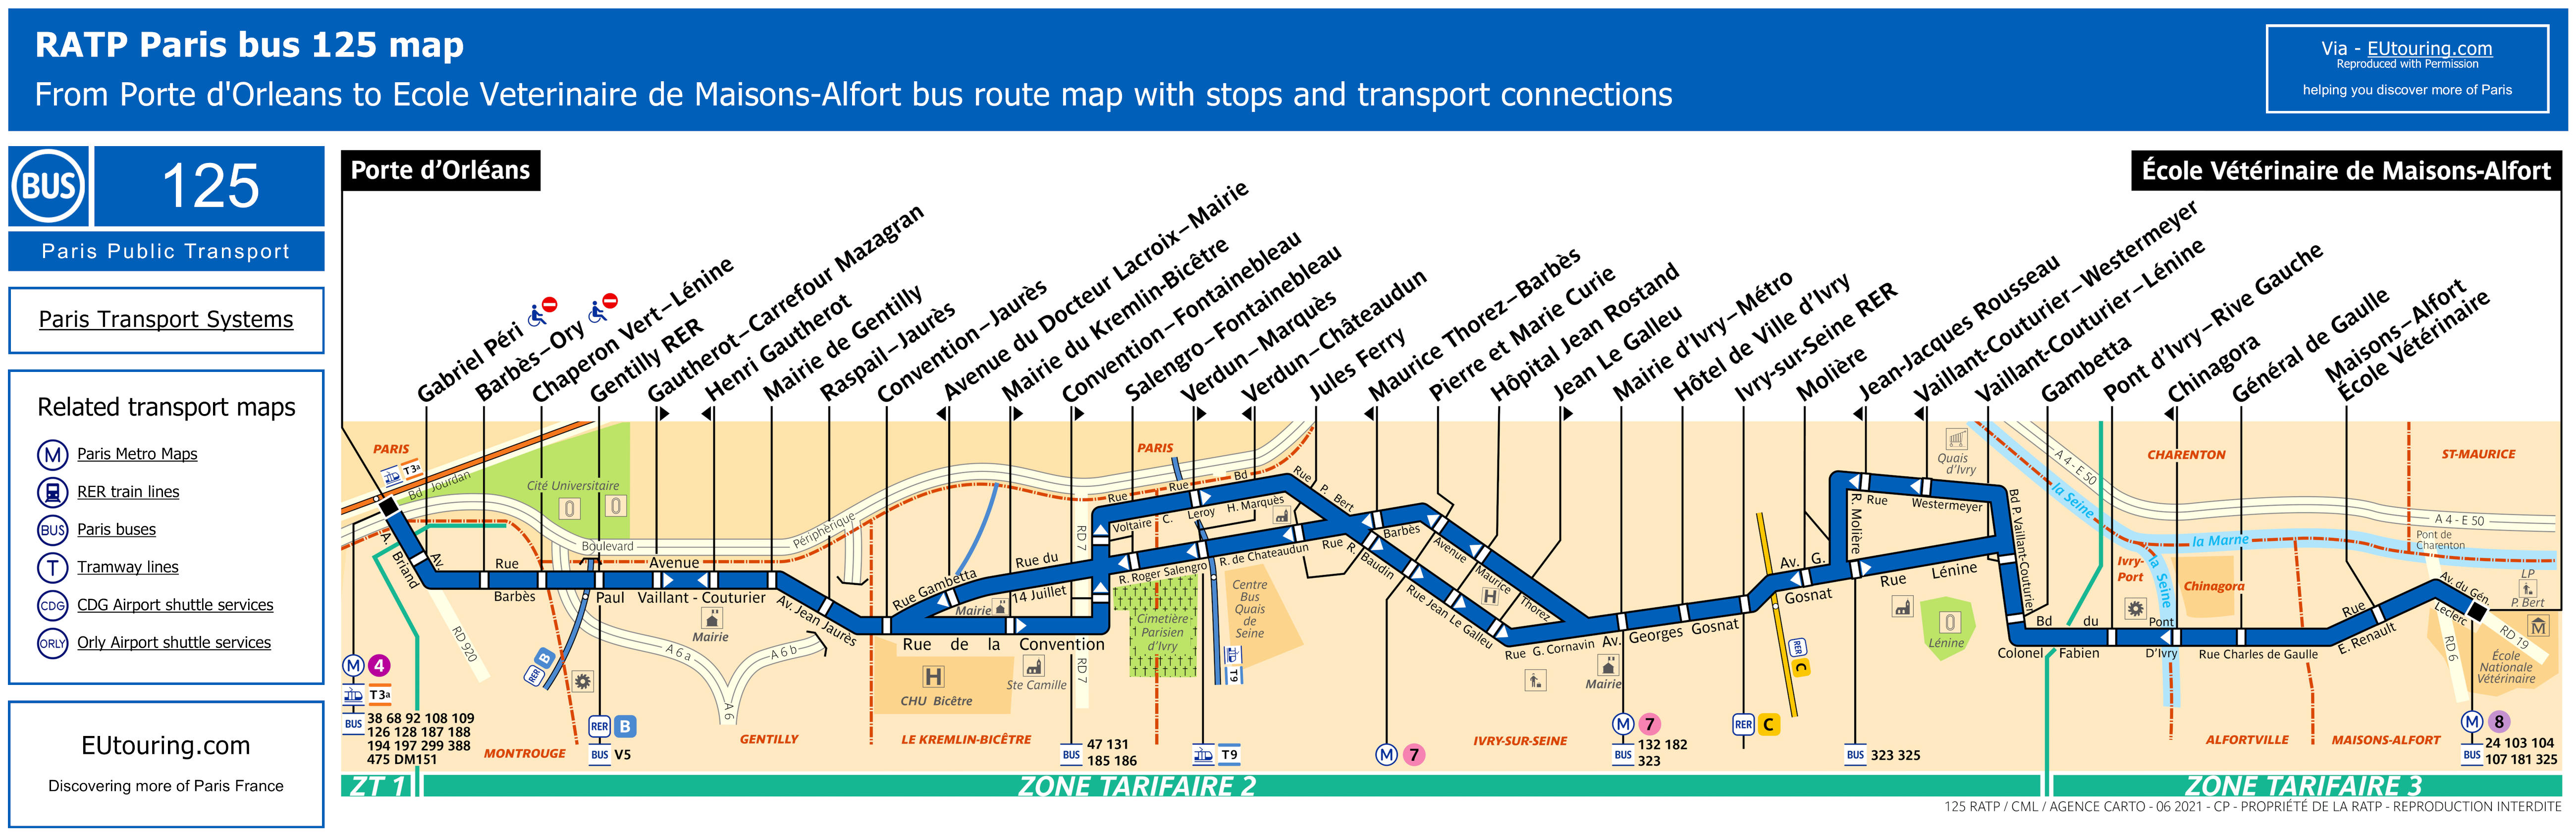 ratp route maps for paris bus lines 120 through to 129